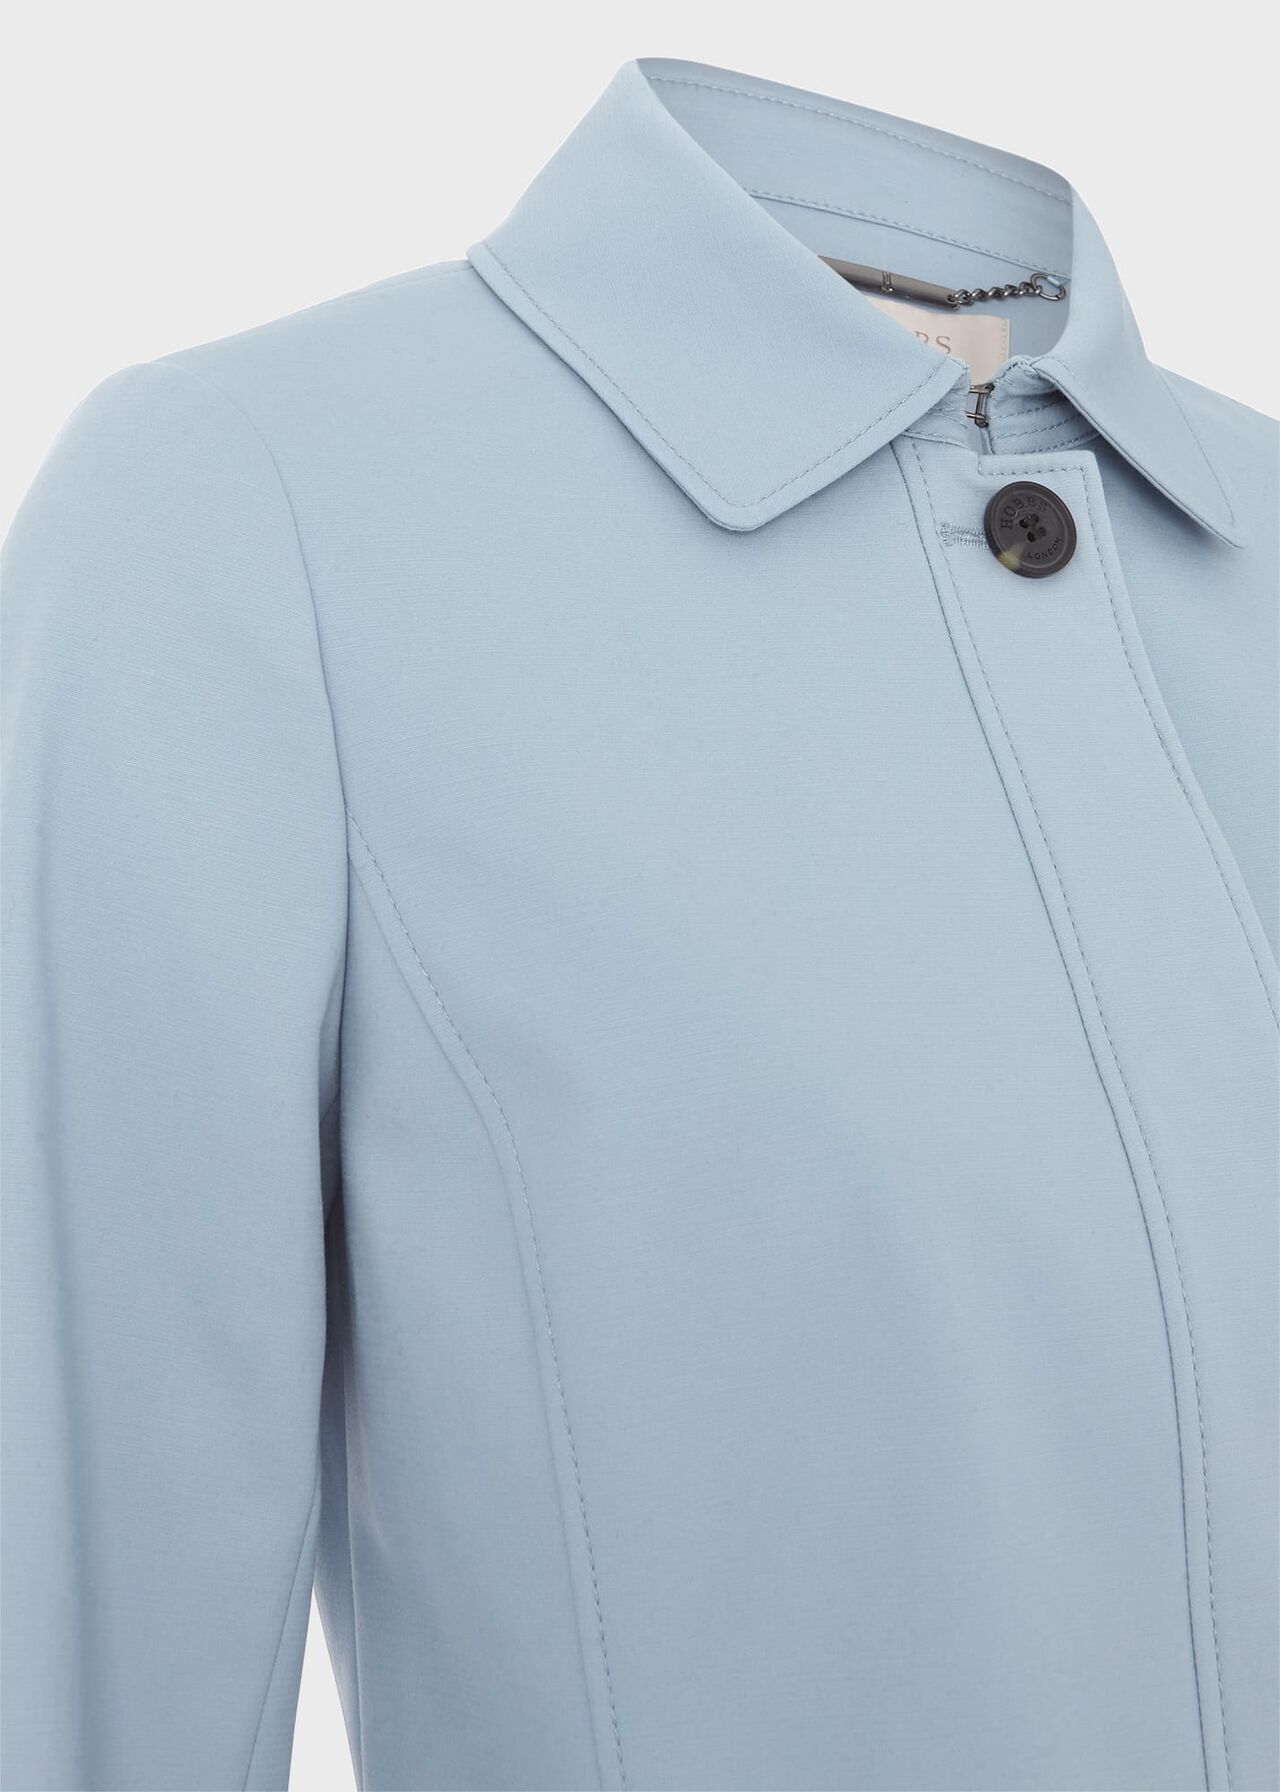 Jane Shower Resistant Trench Coat, Pale Blue, hi-res